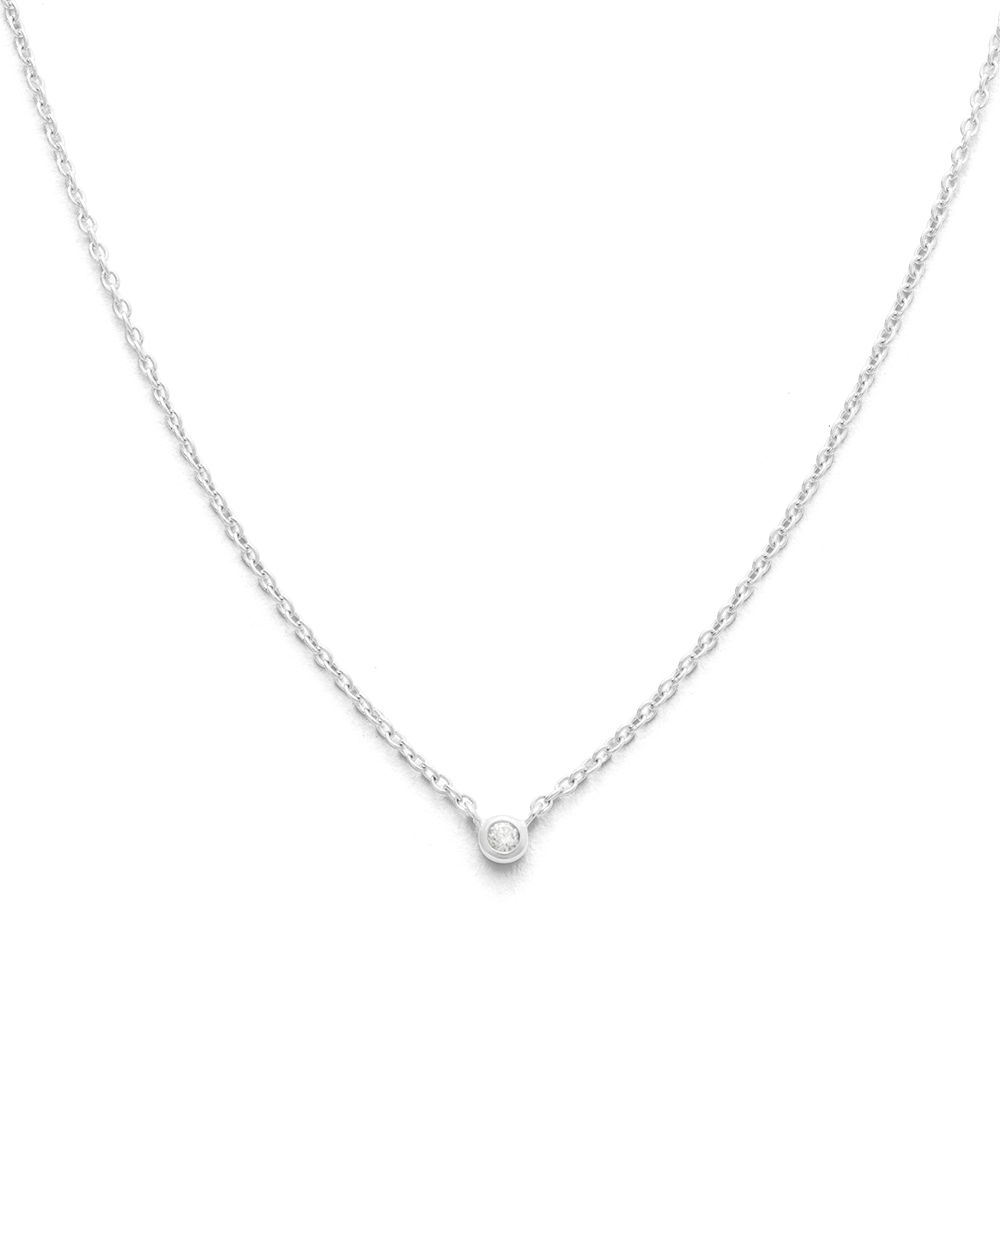 PETITE DIAMOND NECKLACE (STERLING SILVER)